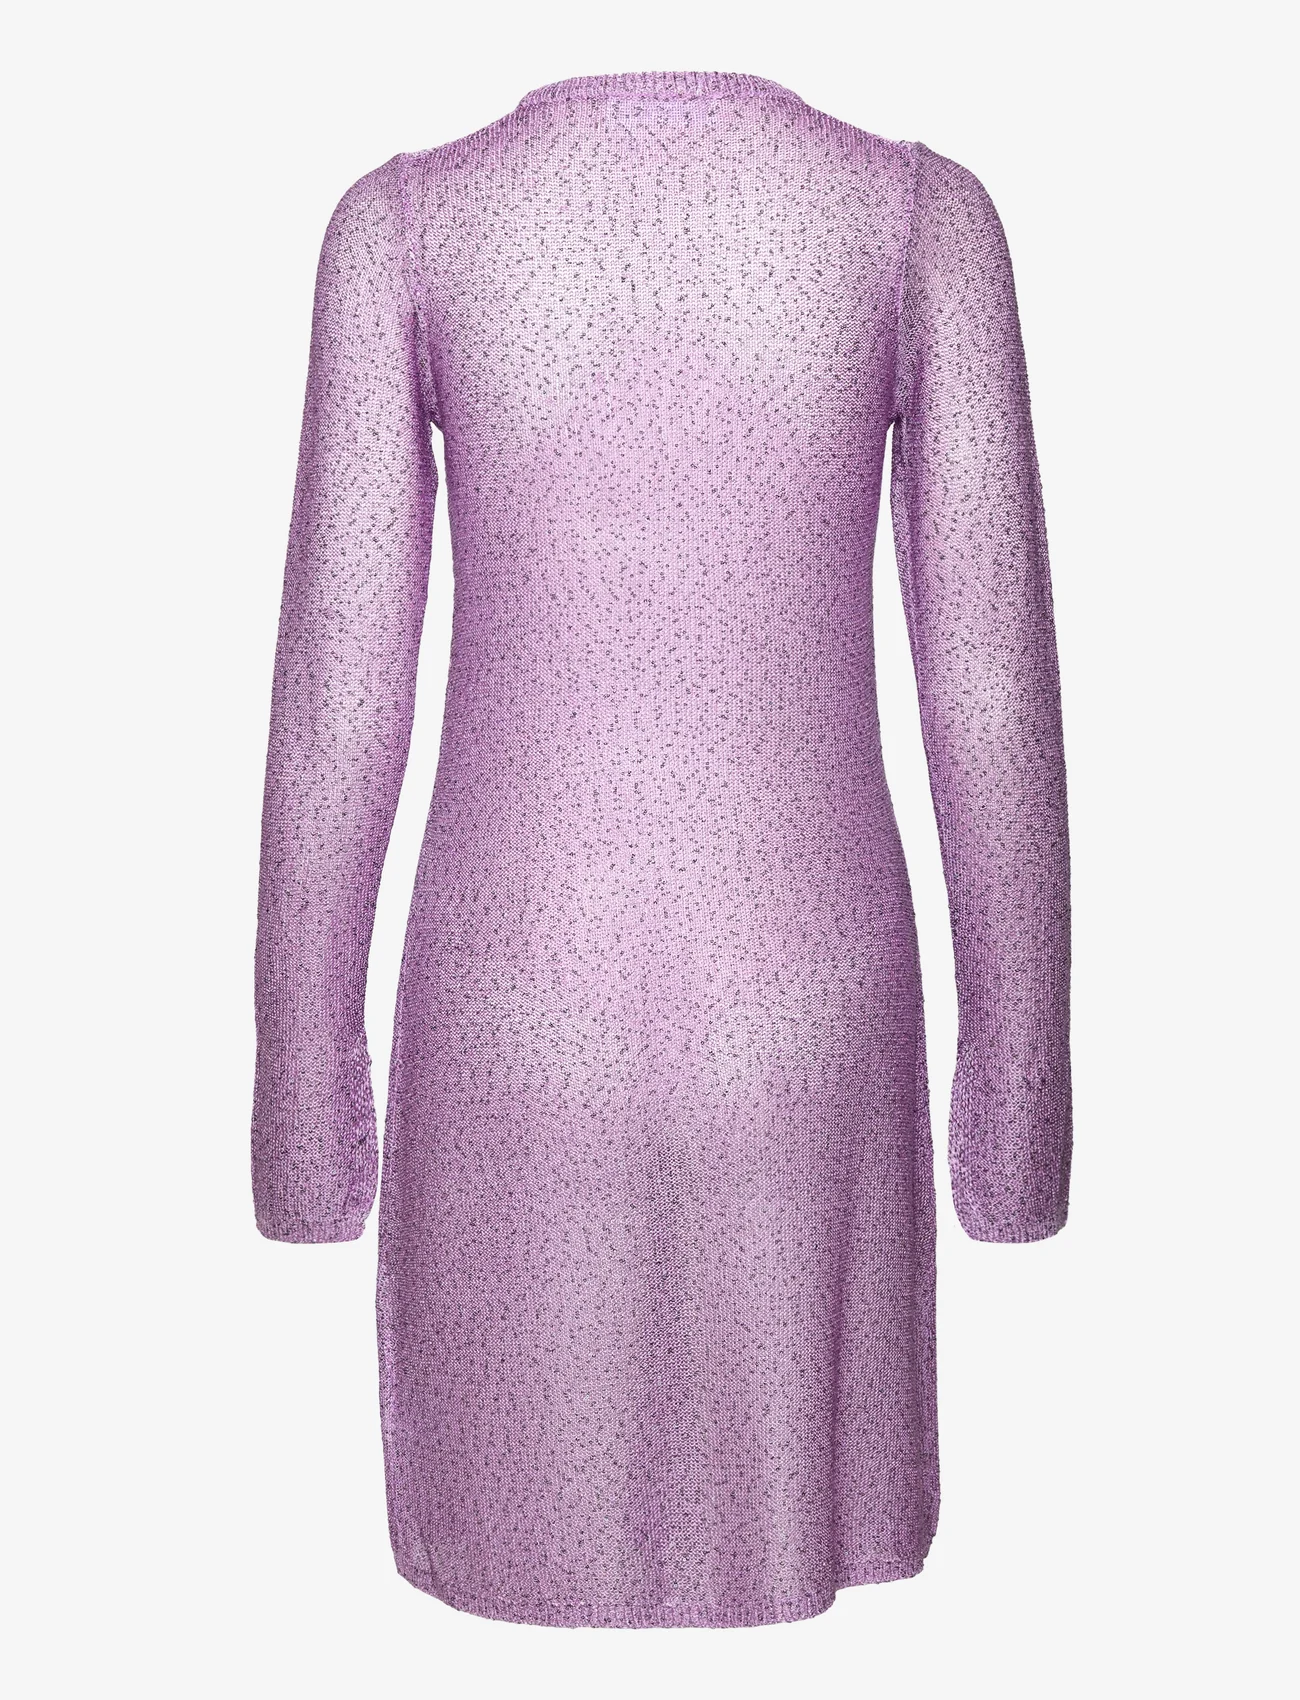 REMAIN Birger Christensen - Sequin Knit Long-Sleeve Mini Dress - paljettklänningar - purple rose - 1